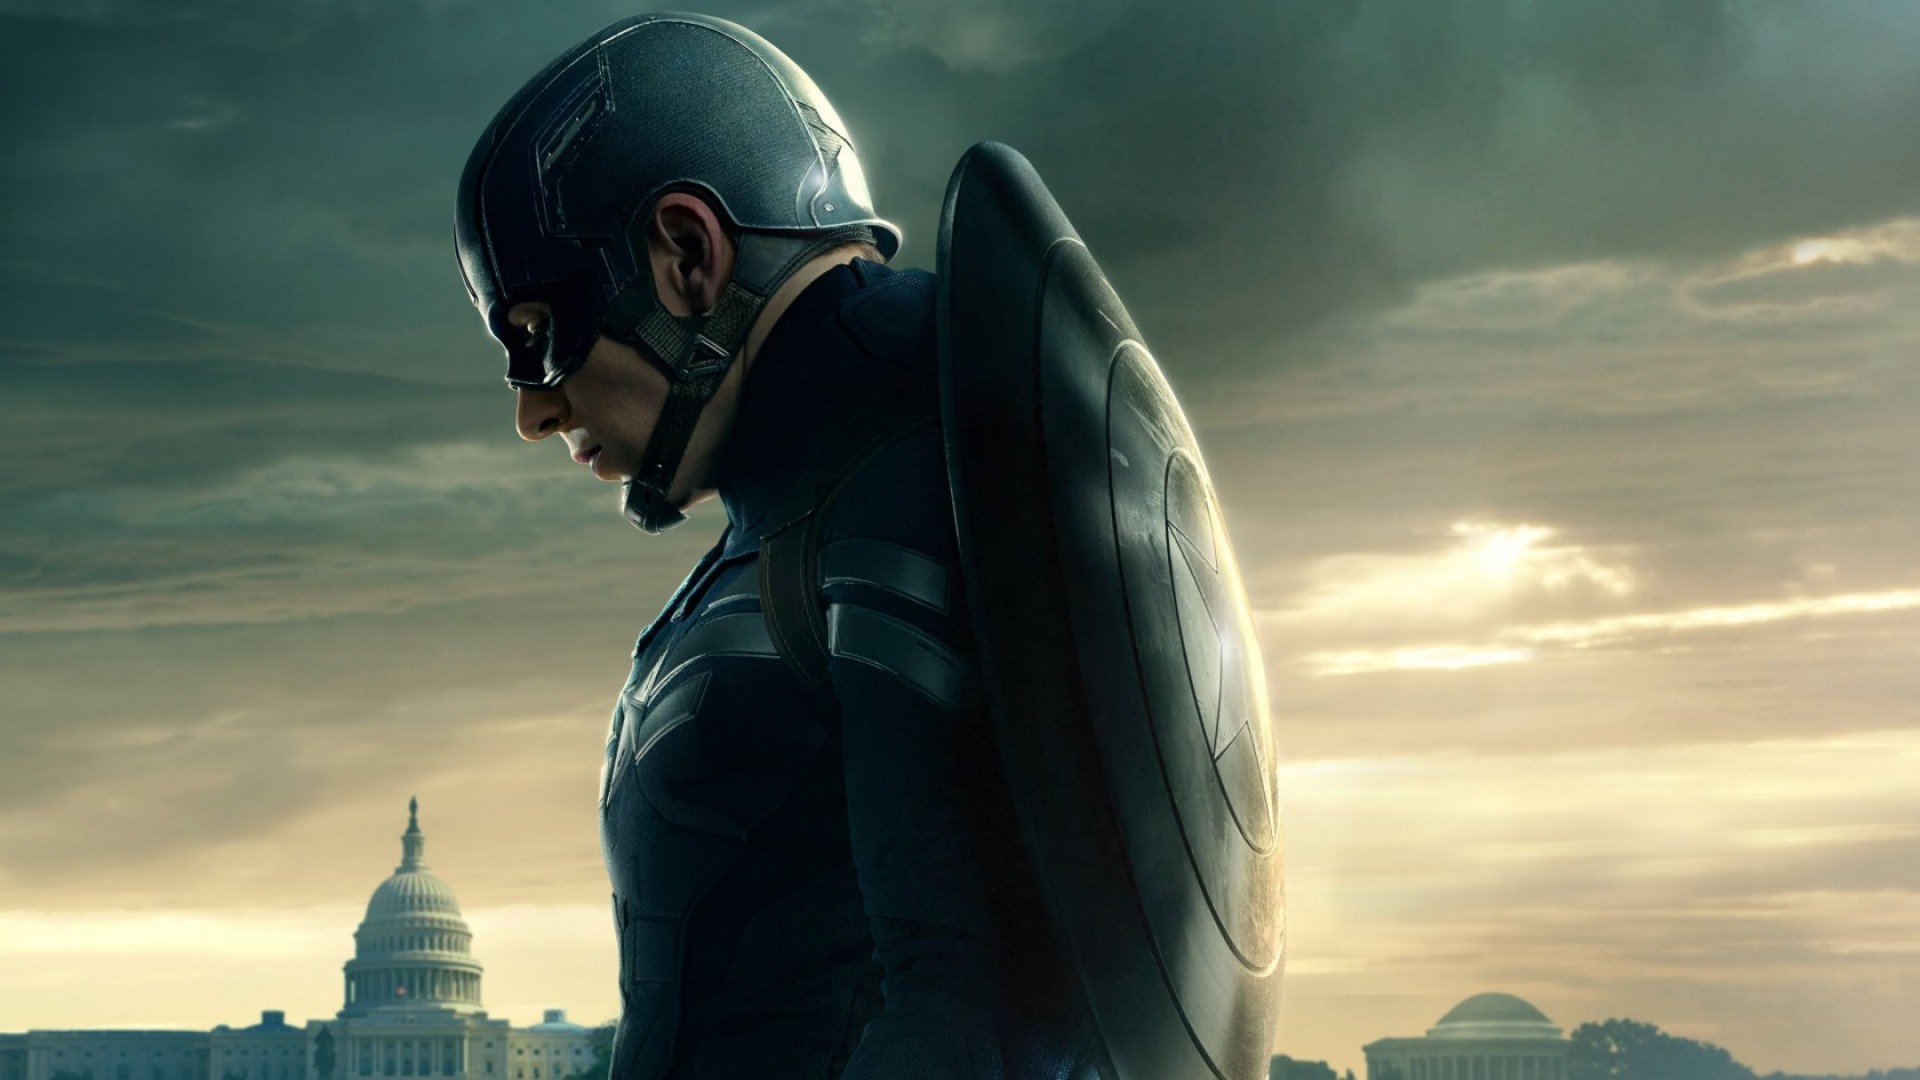 People 1920x1080 movies superhero Captain America Marvel Cinematic Universe shield men